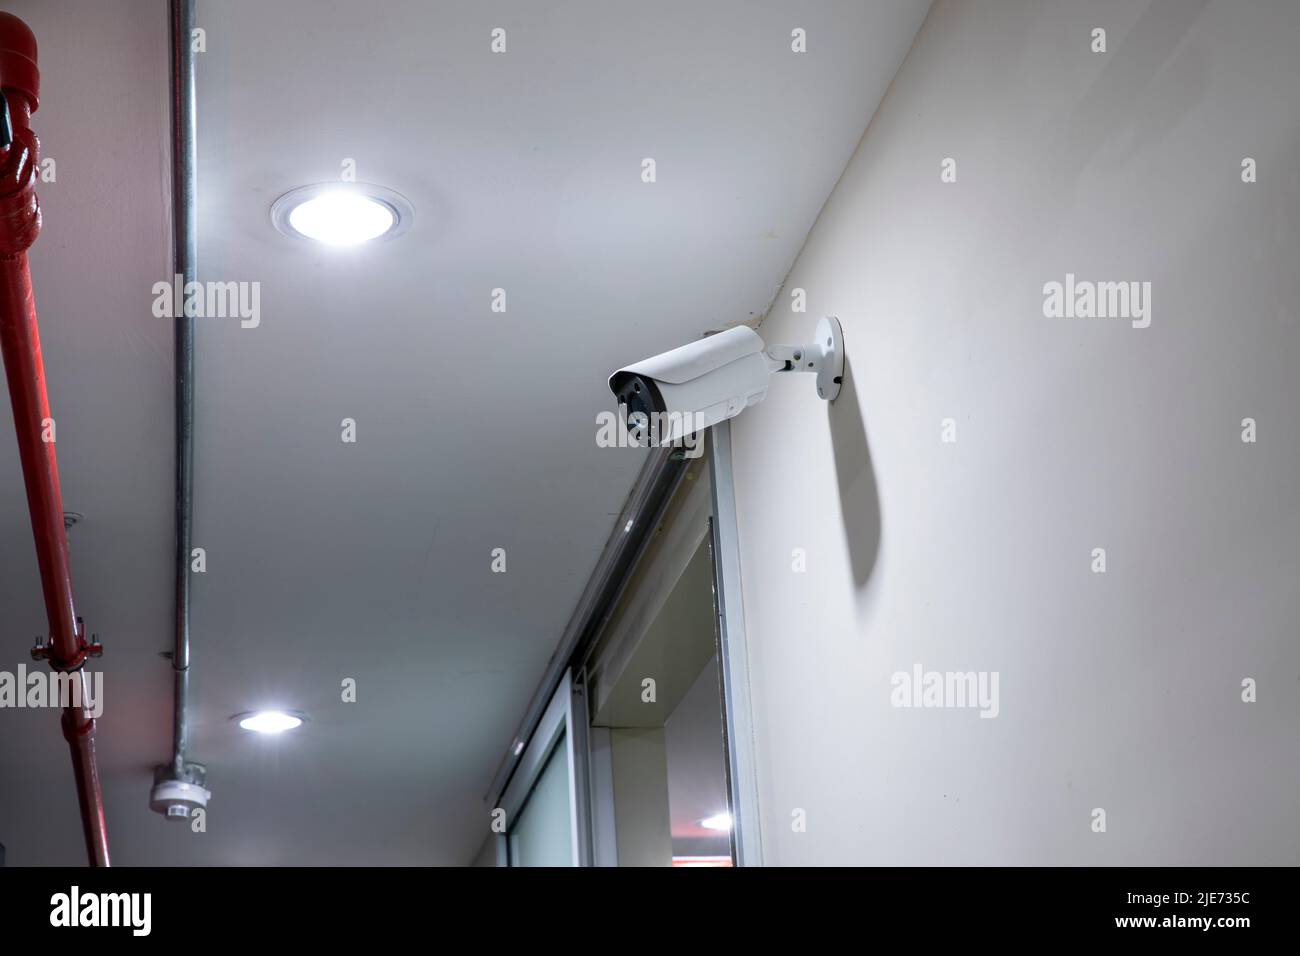 Modern CCTV camera on a wall Stock Photo